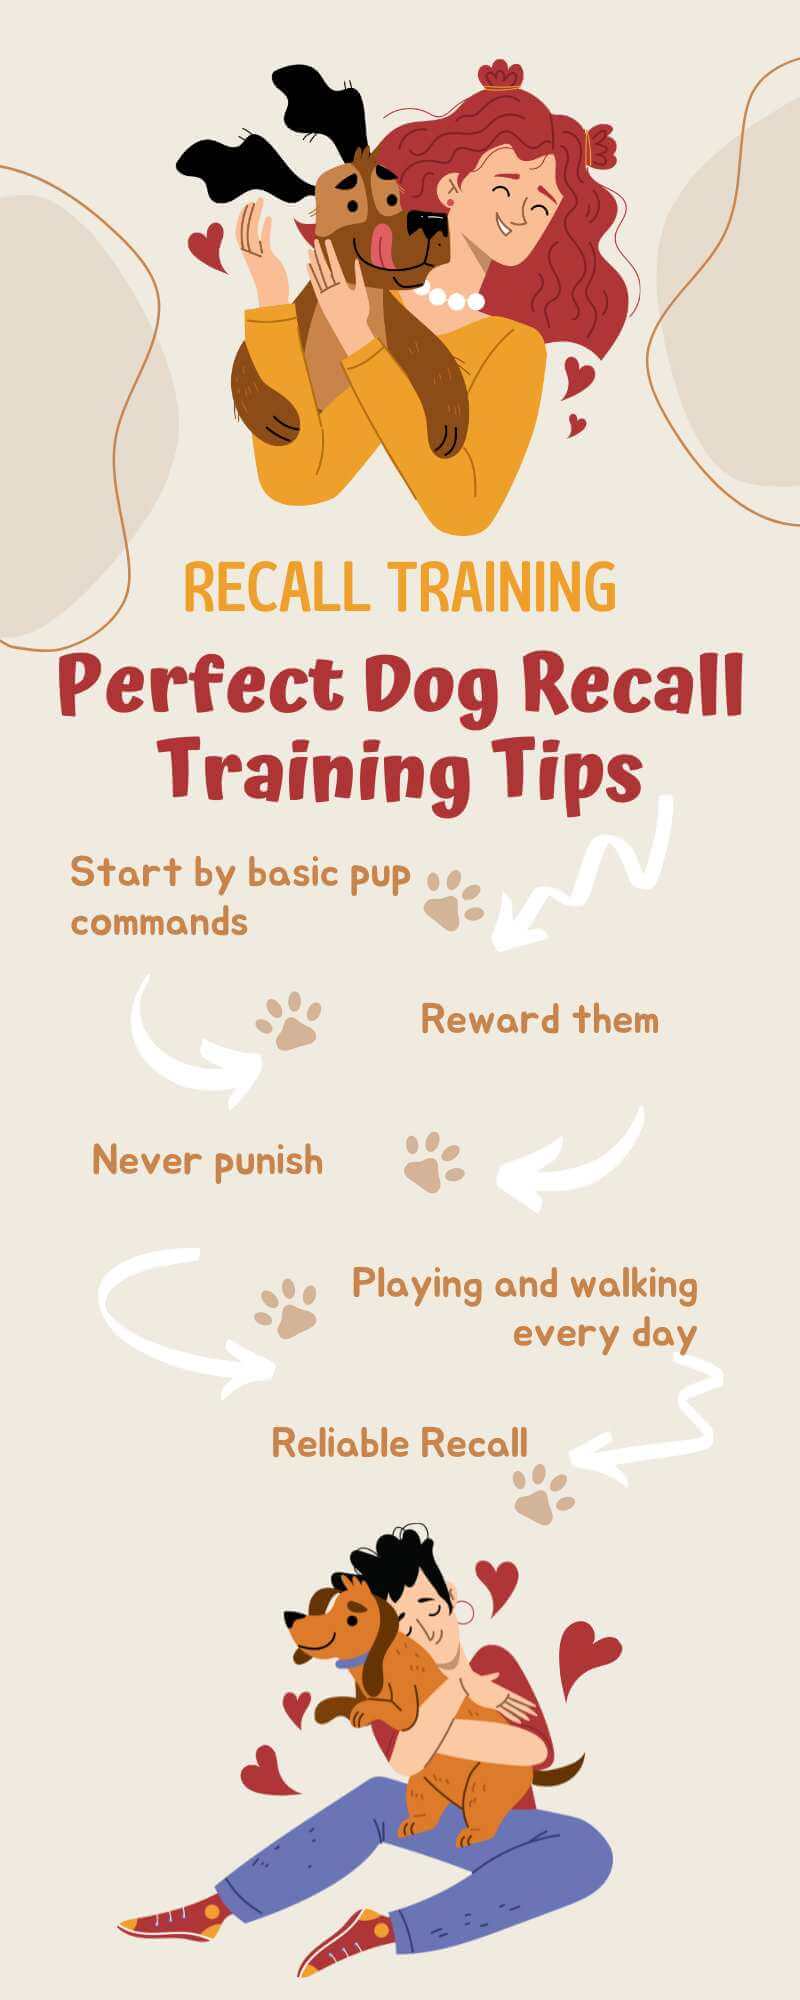 How do you train perfect recall